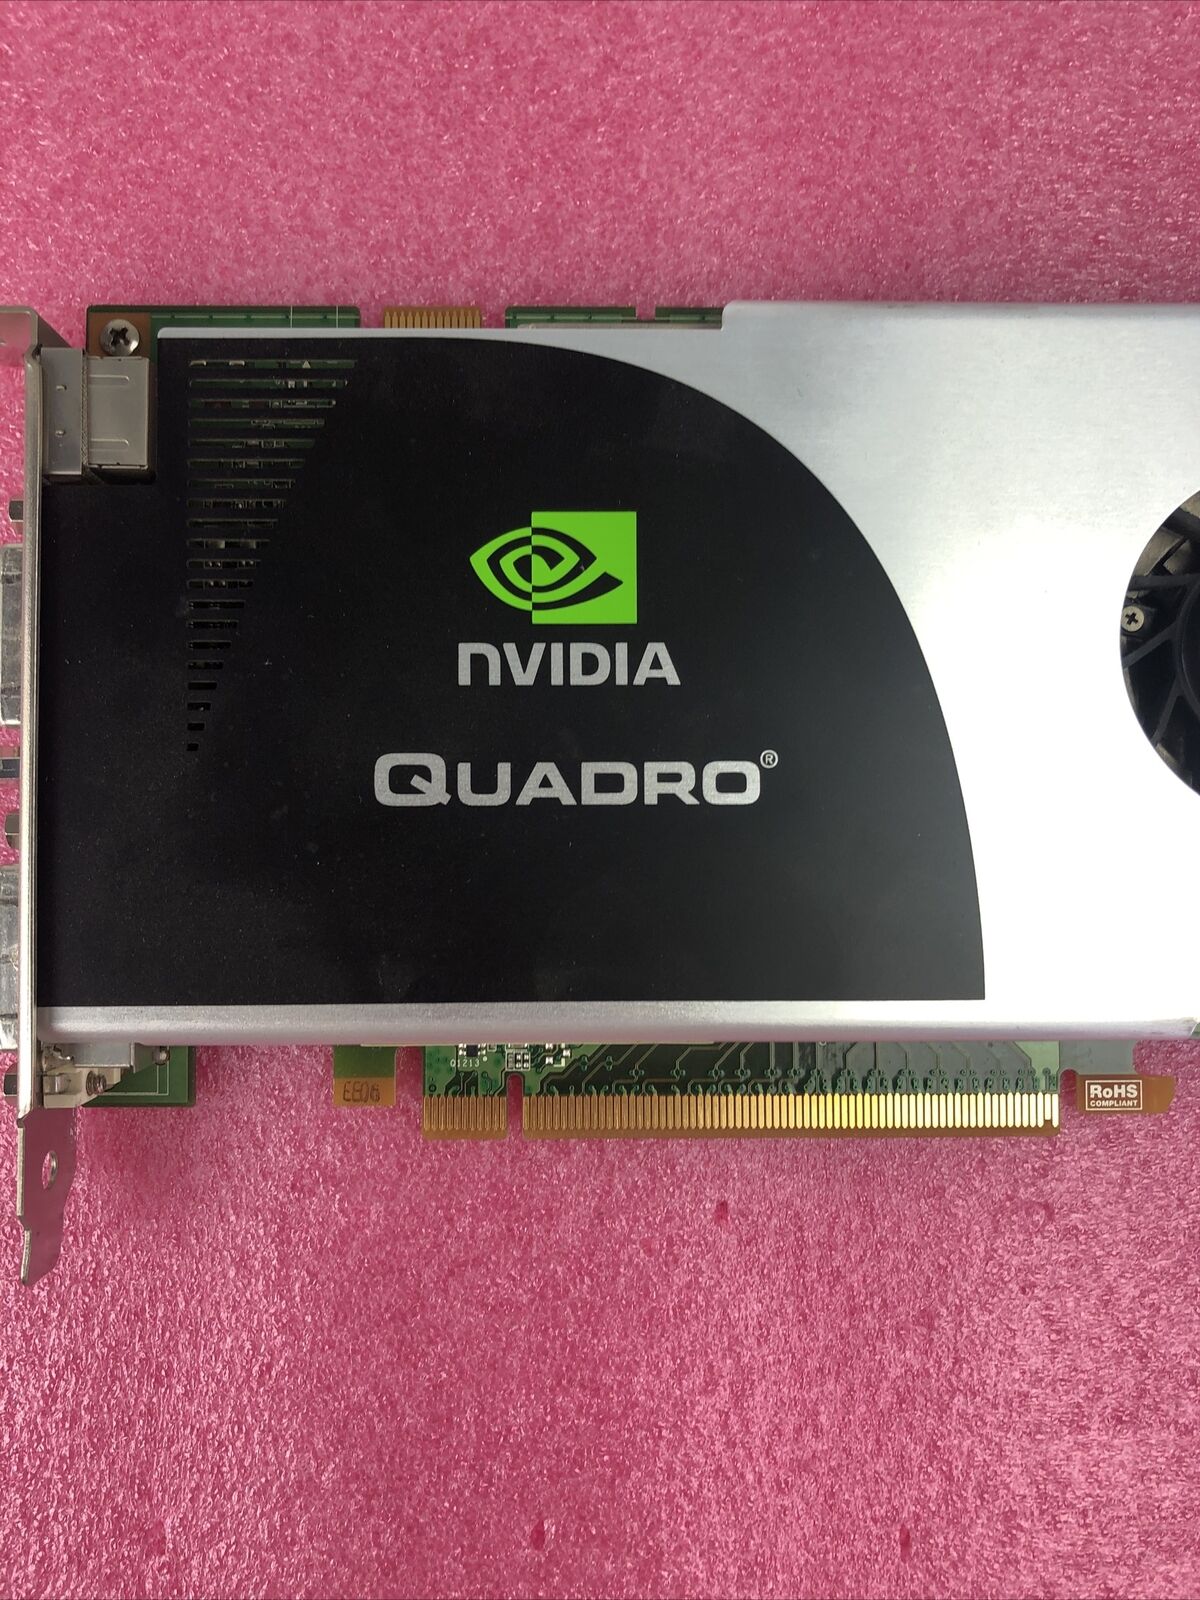 Nvidia Quadro FX 3700 512MB VRAM DDR3 PCI-E Grahpics Card